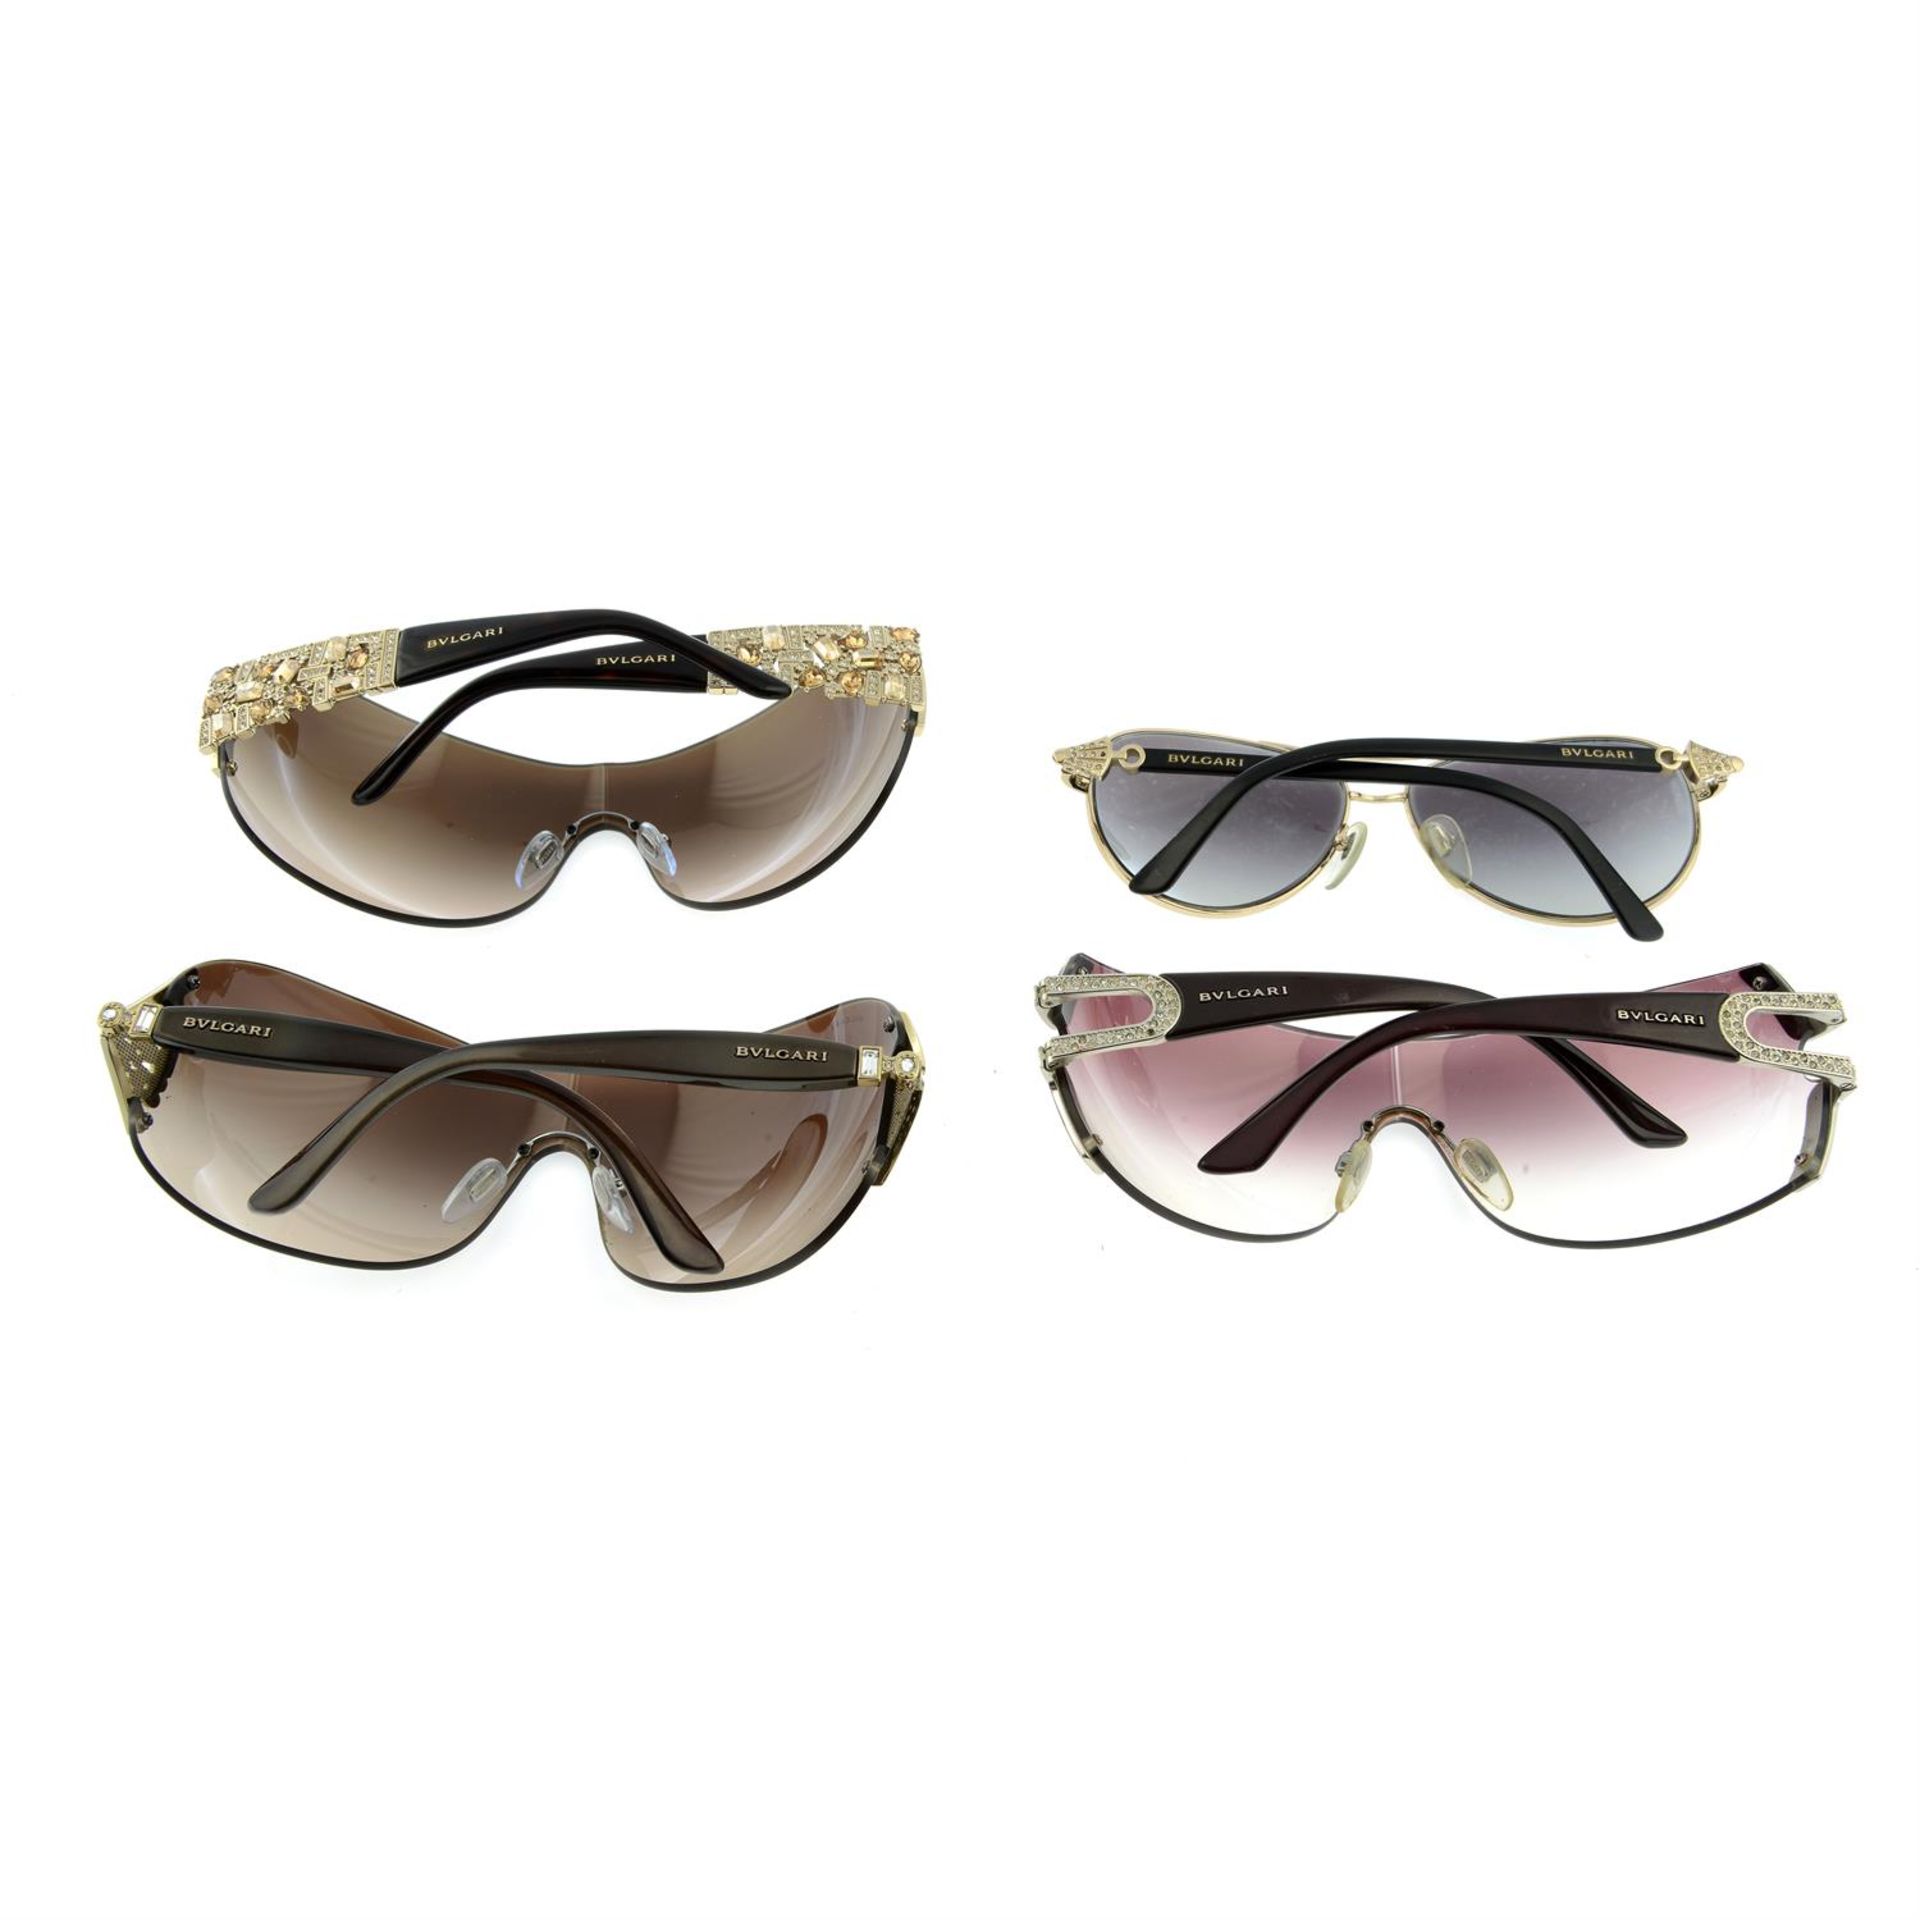 BULGARI - four pairs of sunglasses. - Image 2 of 3